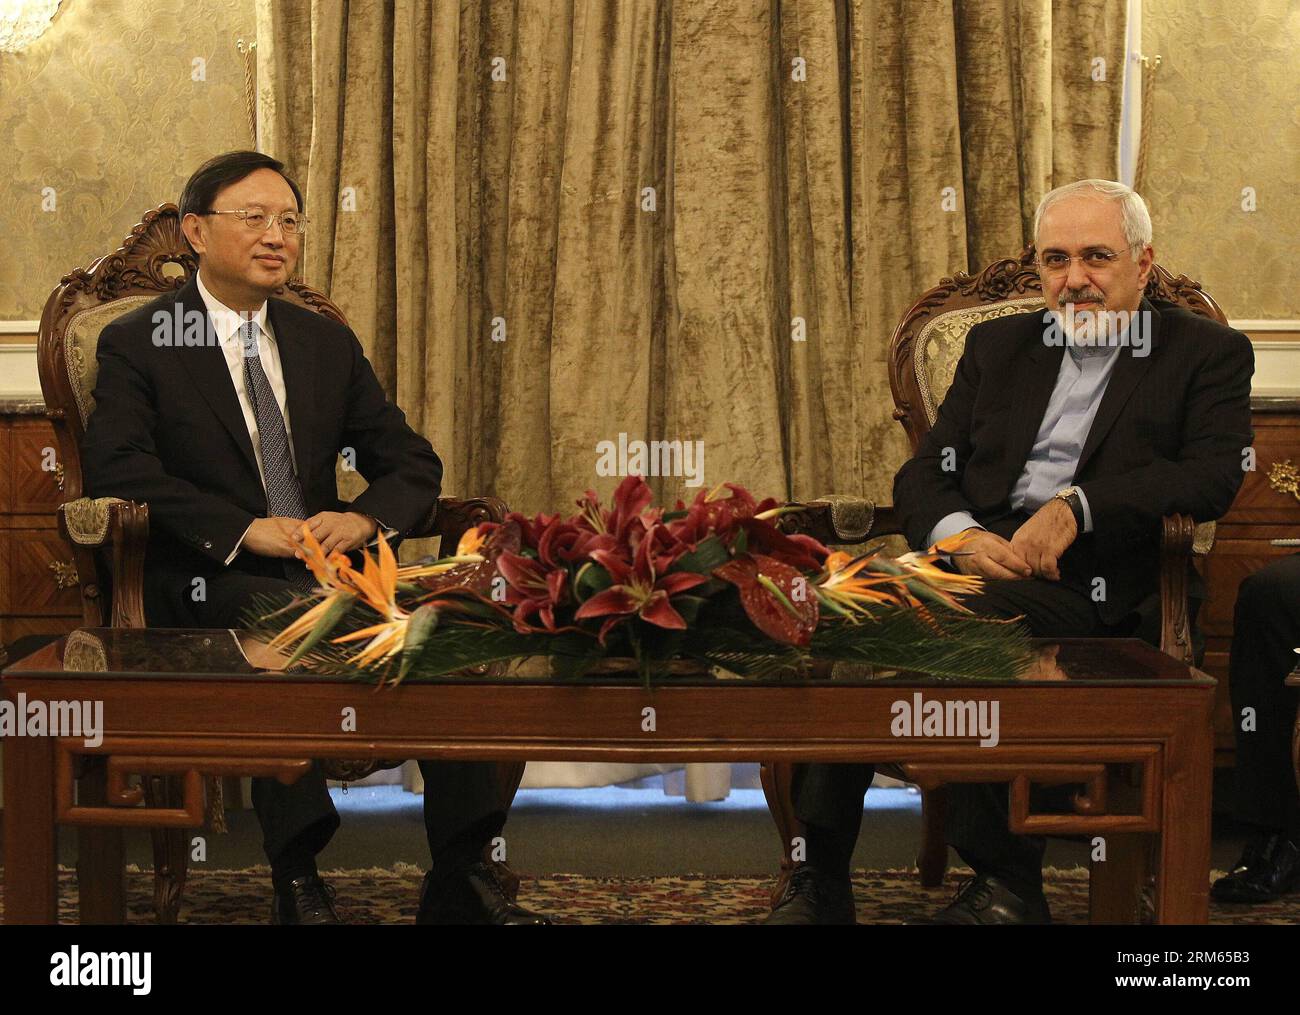 Bildnummer: 60808803  Datum: 08.12.2013  Copyright: imago/Xinhua     Chinese State Councilor Yang Jiechi (L) meets with Iranian Foreign Minister Mohammad-Javad Zarif in Tehran, capital of Iran, on Dec. 8, 2013. (Xinhua/Ahmad Halabisaz) IRAN-CHINA-YANG JIECHI-VISIT PUBLICATIONxNOTxINxCHN People Politik xcb x0x 2013 quer premiumd Stock Photo